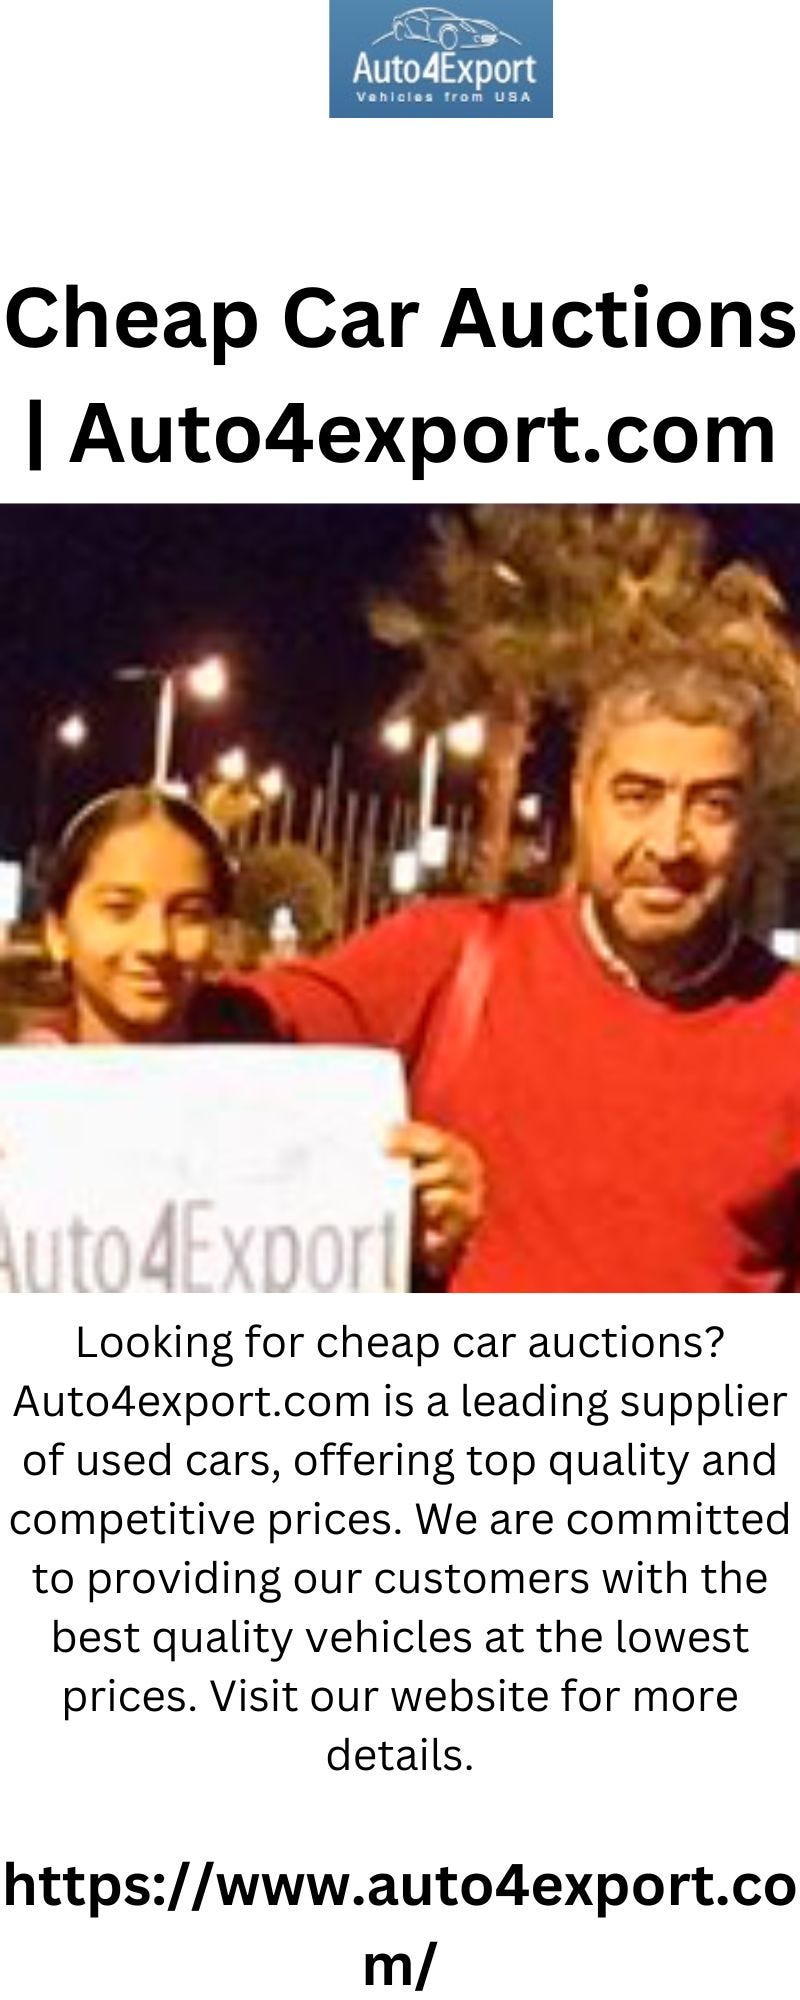 Salvage Cars for Sale  Auto4export.com - Autoexport - Medium